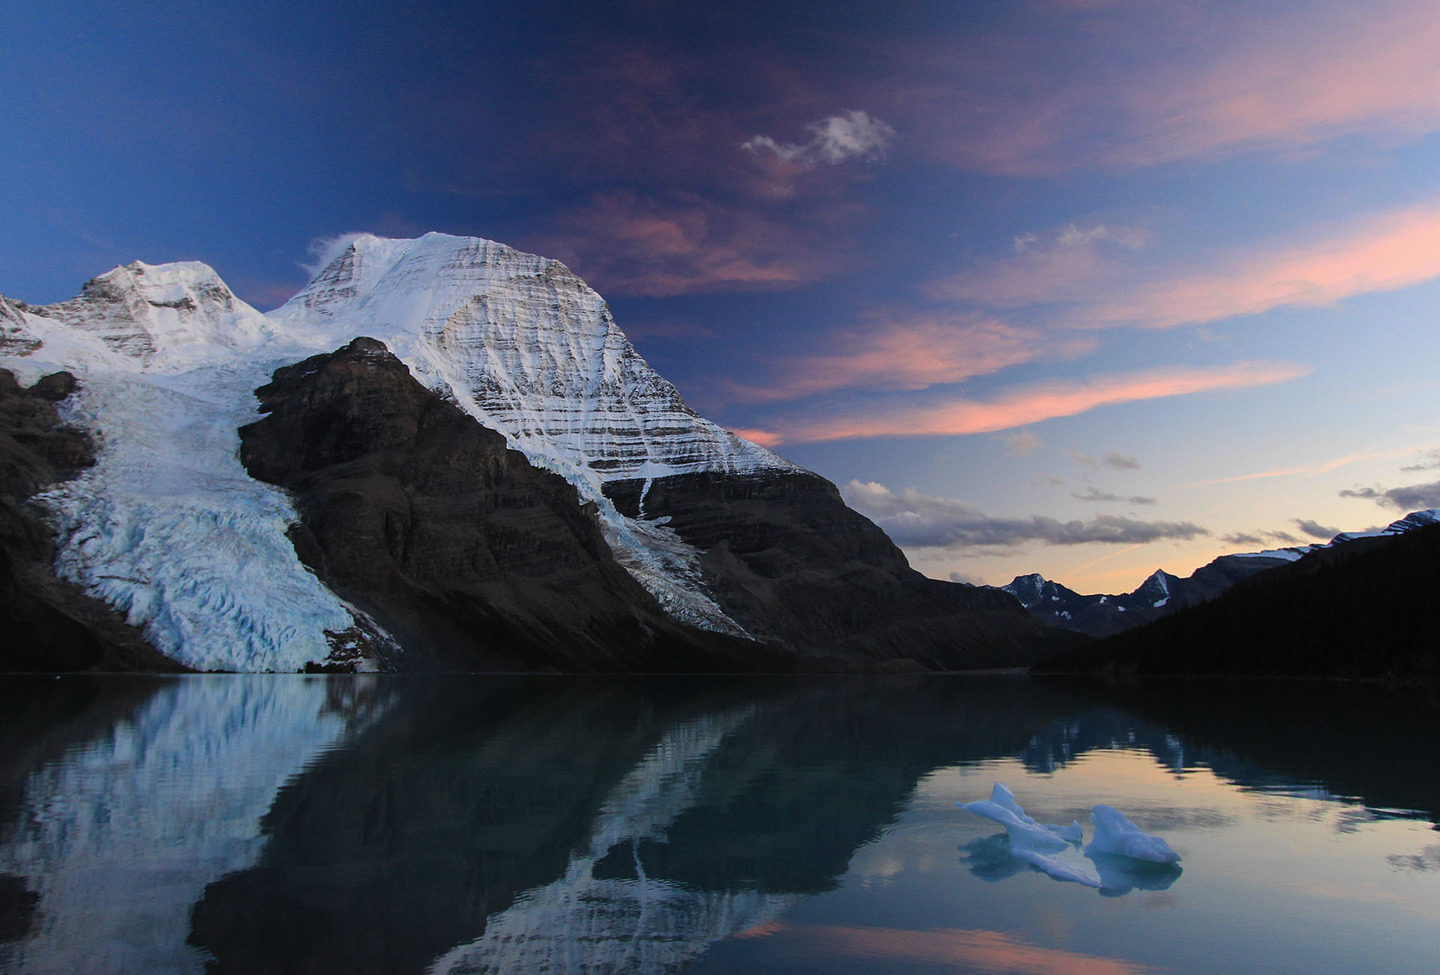 Canada Berg Lake by Daniel Shirking